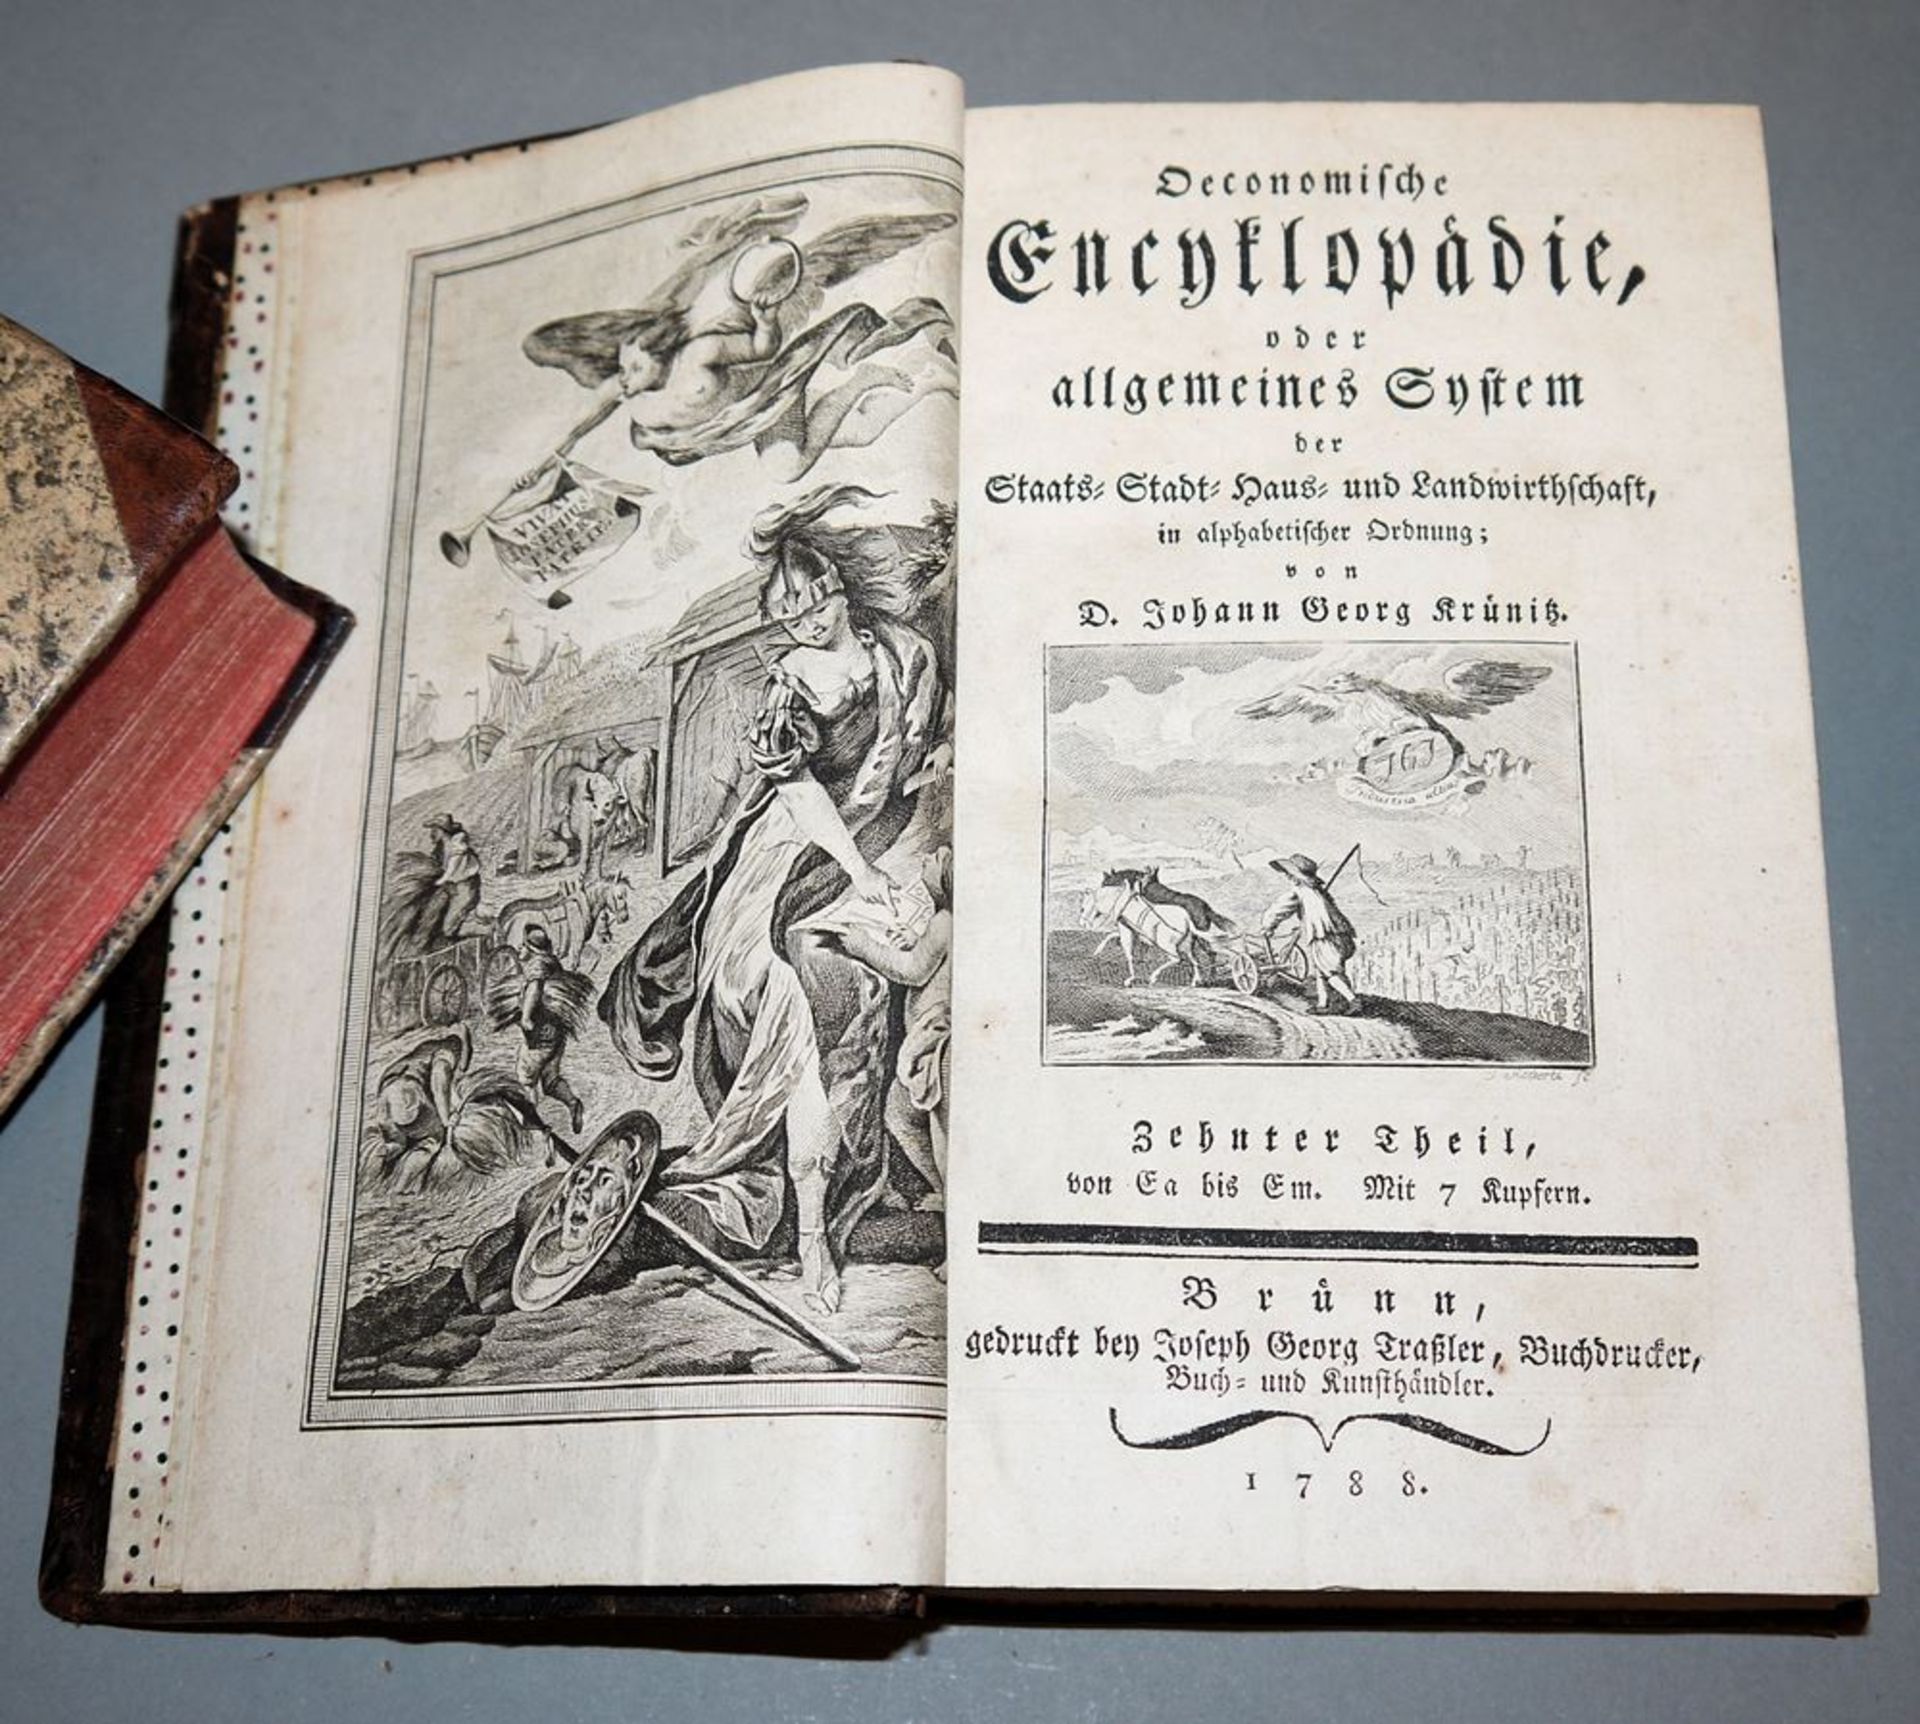 4 Bde. Dr. Johann Georg Krünitz's Ökonomisch-technologische Encyklopädie, 1787-1827 - Image 3 of 5